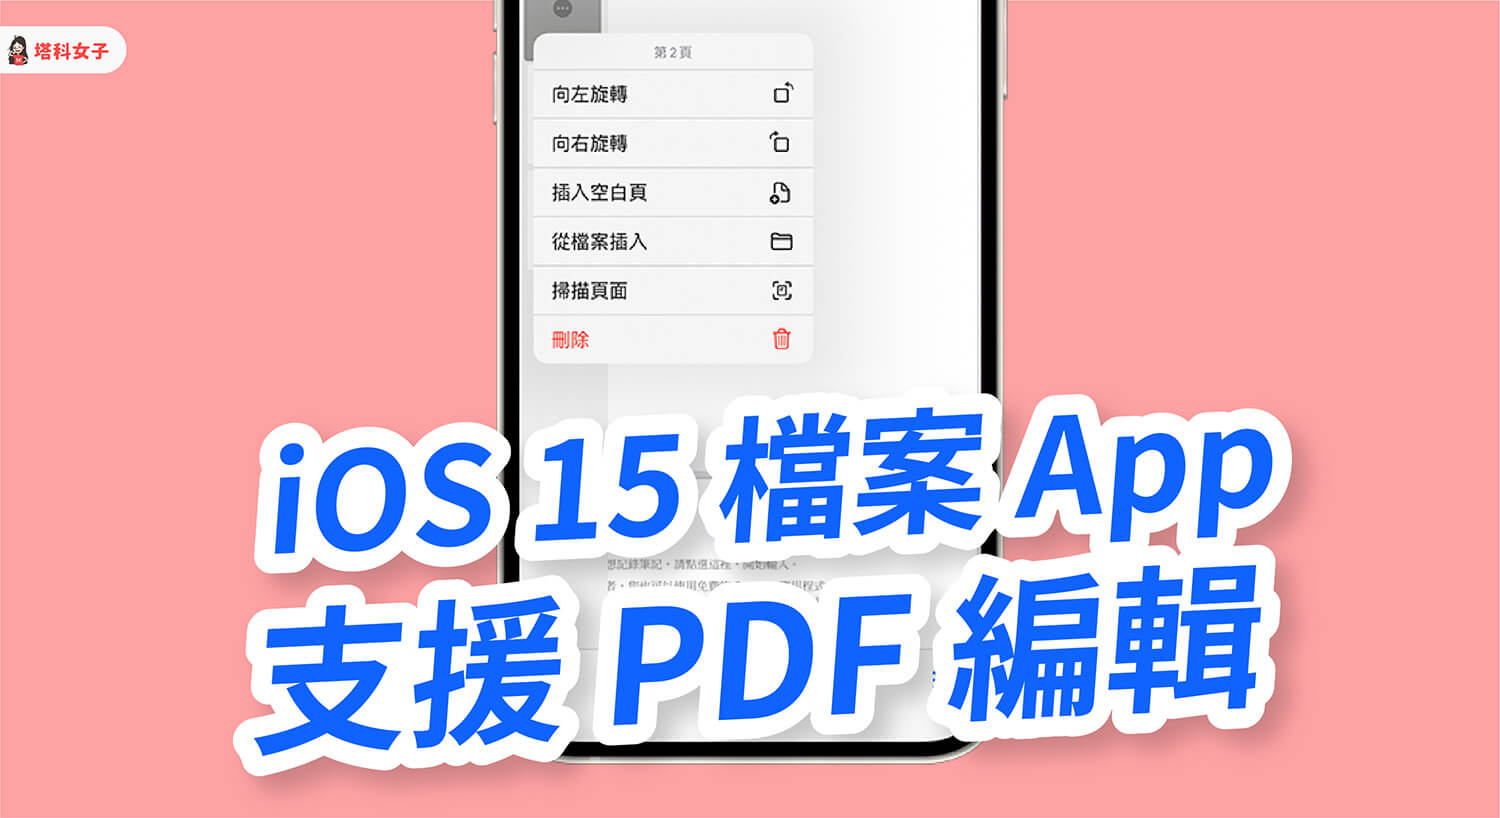 iPhone 如何編輯 PDF？iOS 15 檔案 App 支援 PDF 編輯功能